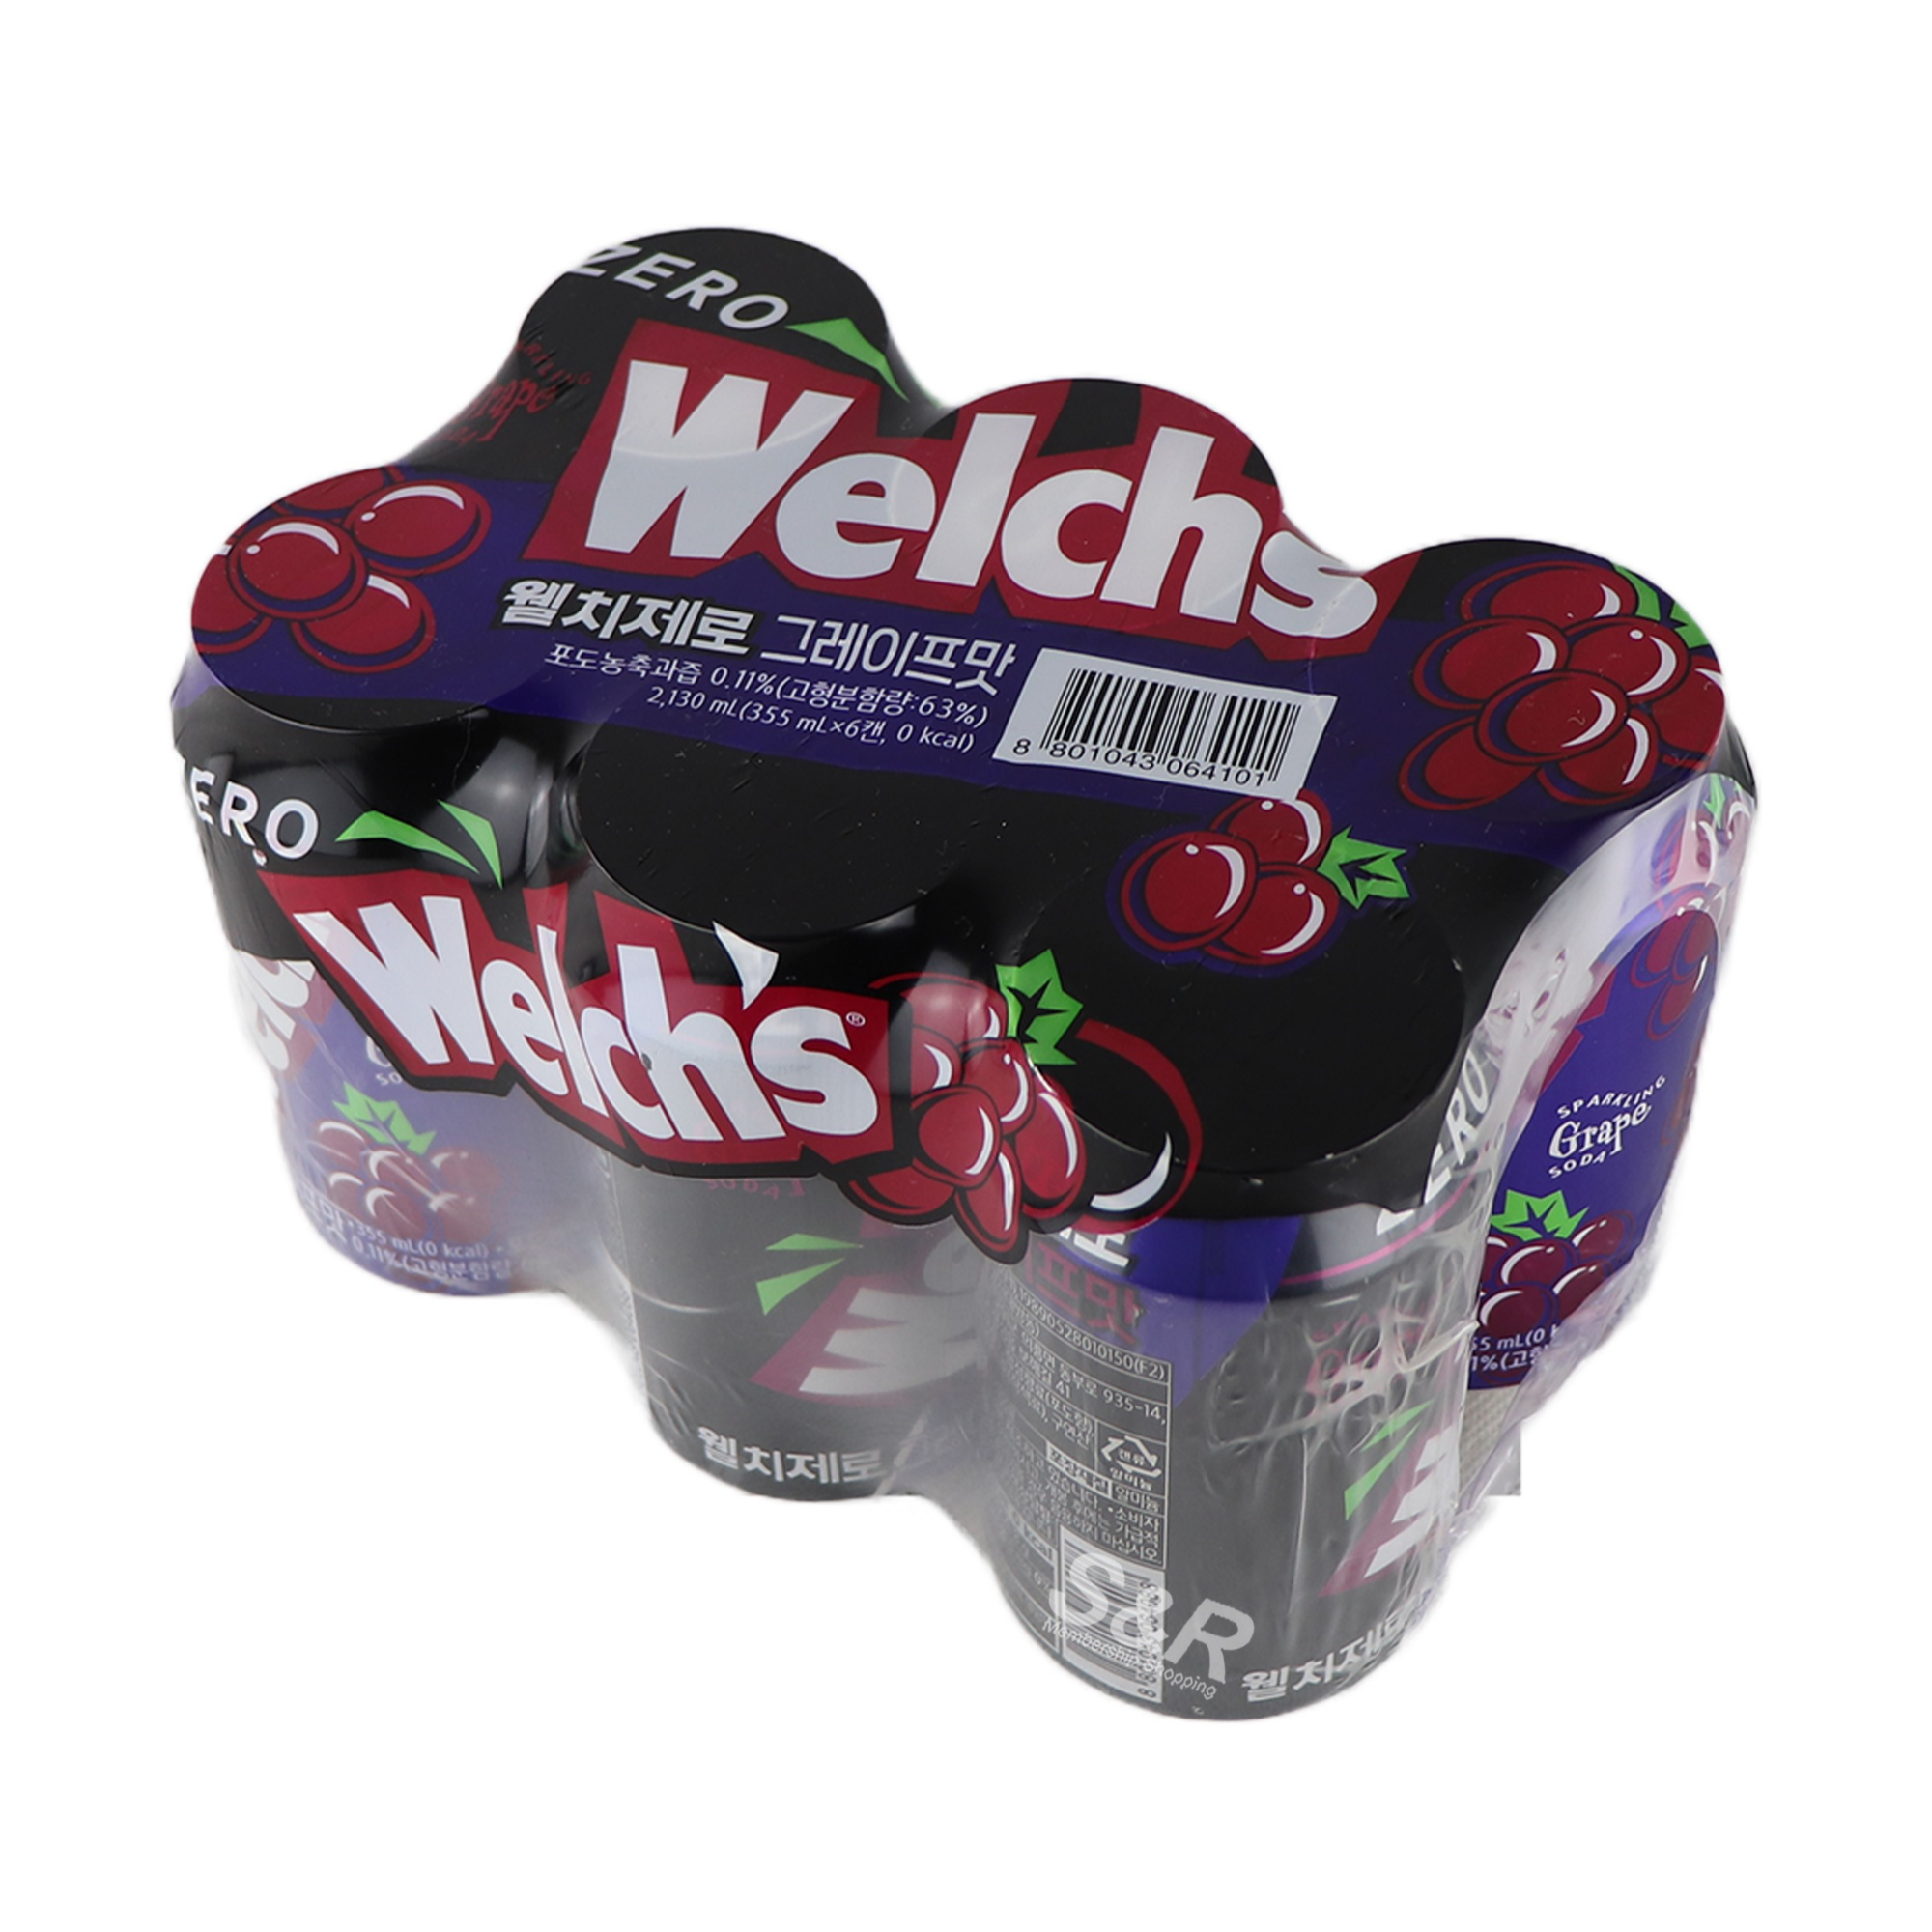 Welch's Zero Sparkling Grape Soda (355mL x 6pcs)